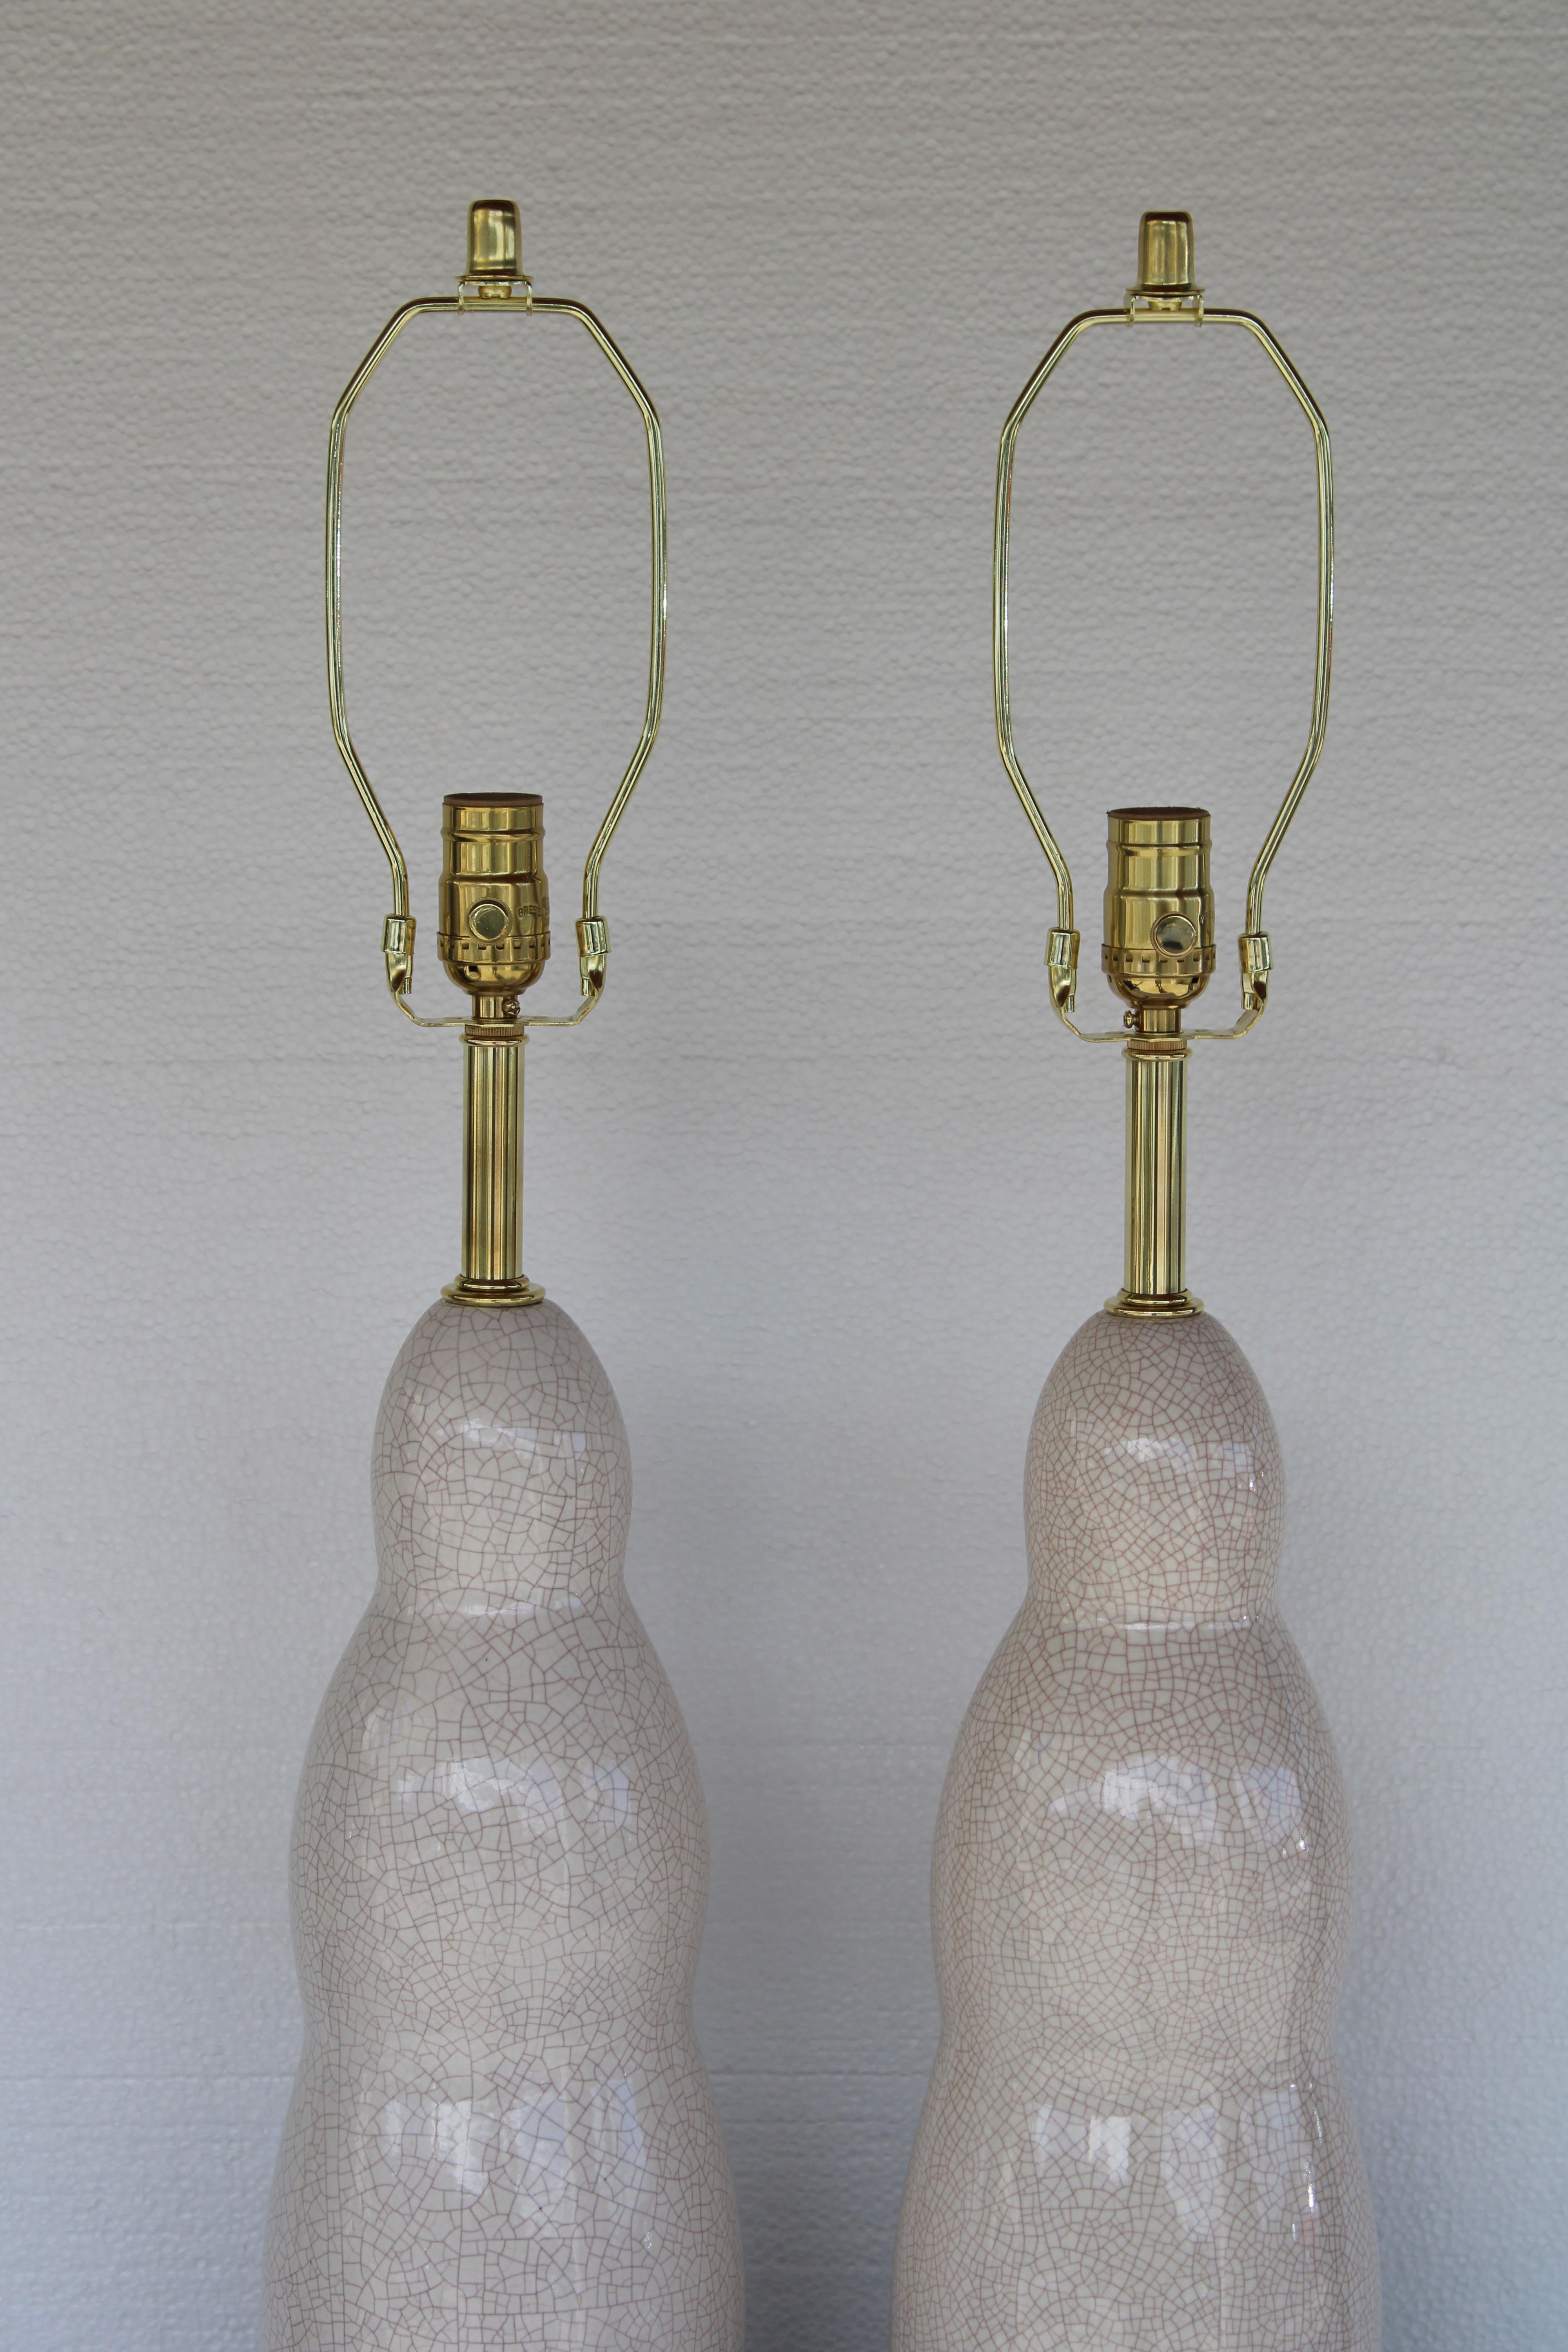 Mid-Century Modern Pair of Ceramic Crackle Glaze Lamps